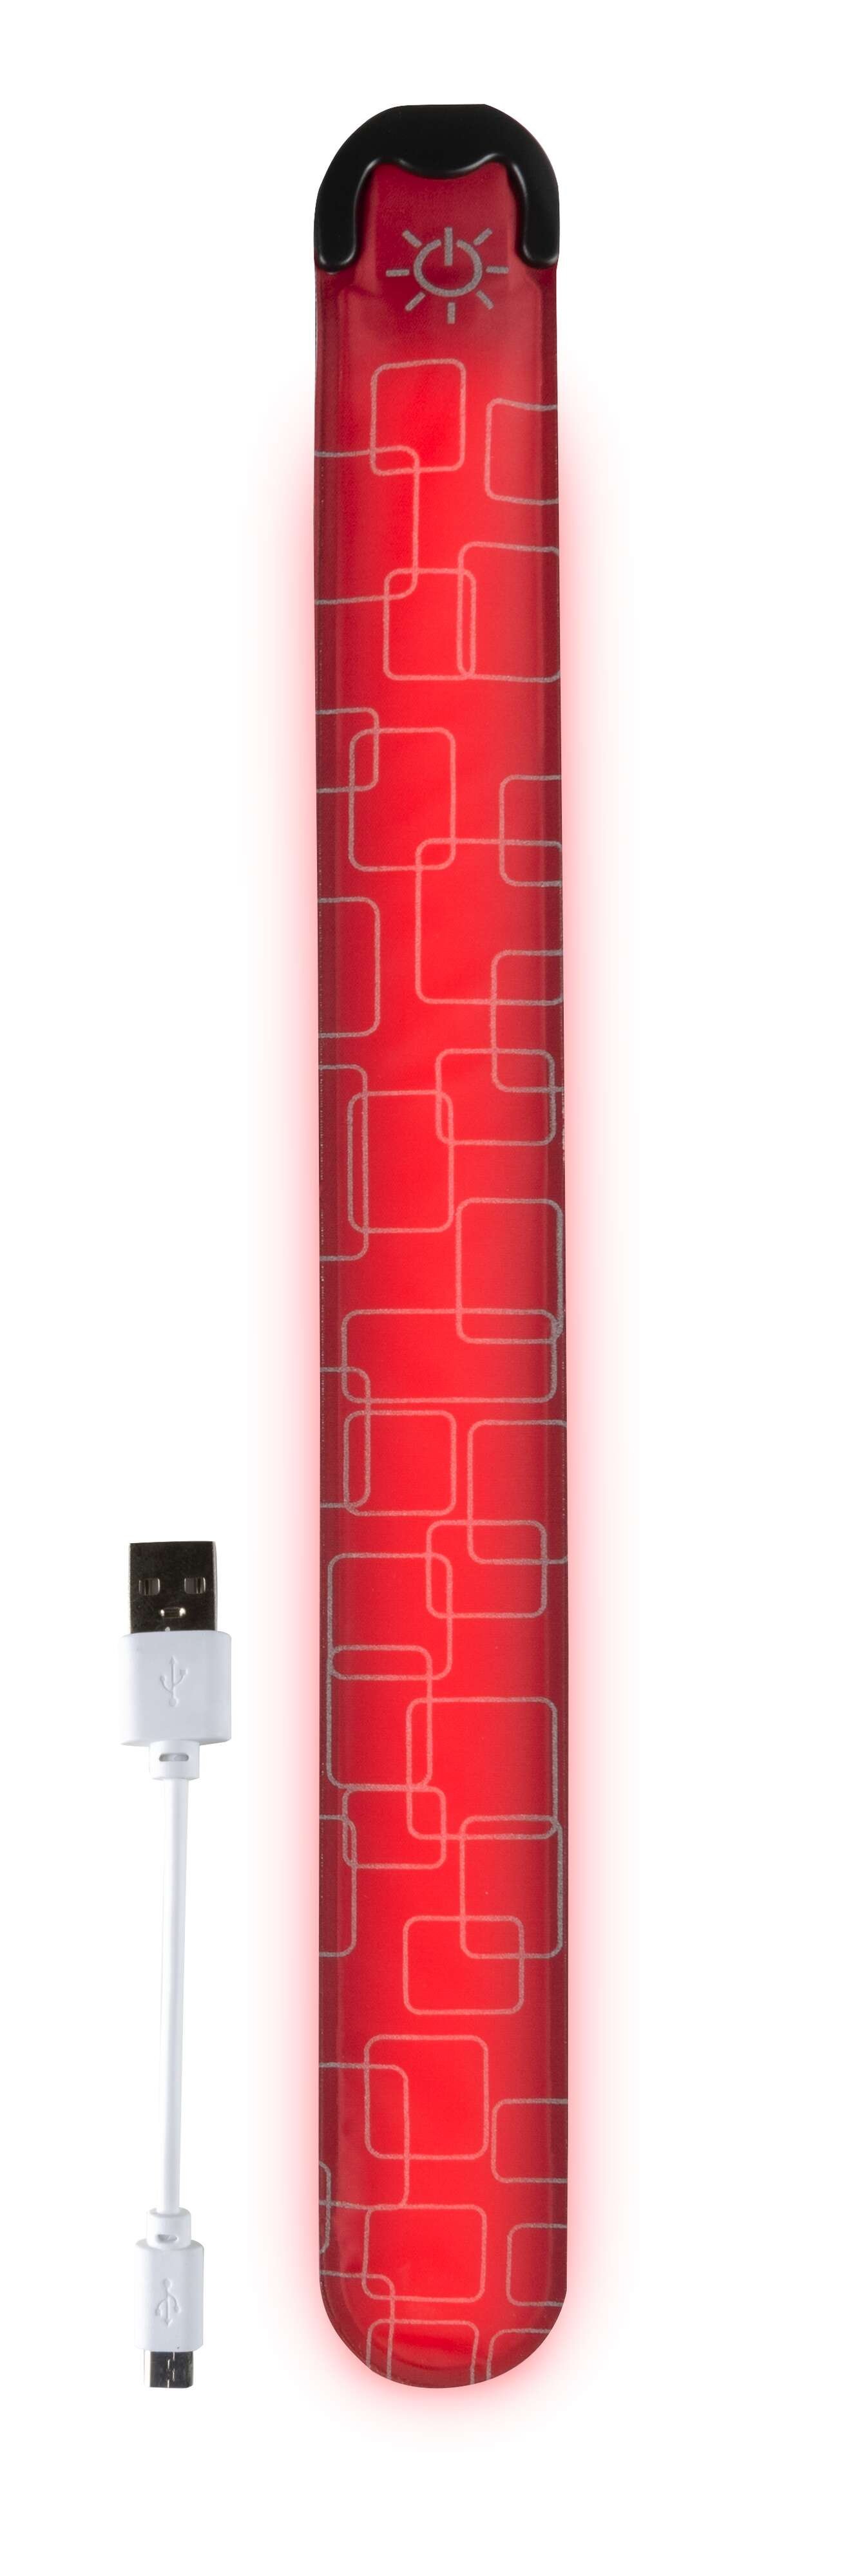 Slap Wrap LED lumineux avec recharge USB 36x3,5 cm rouge